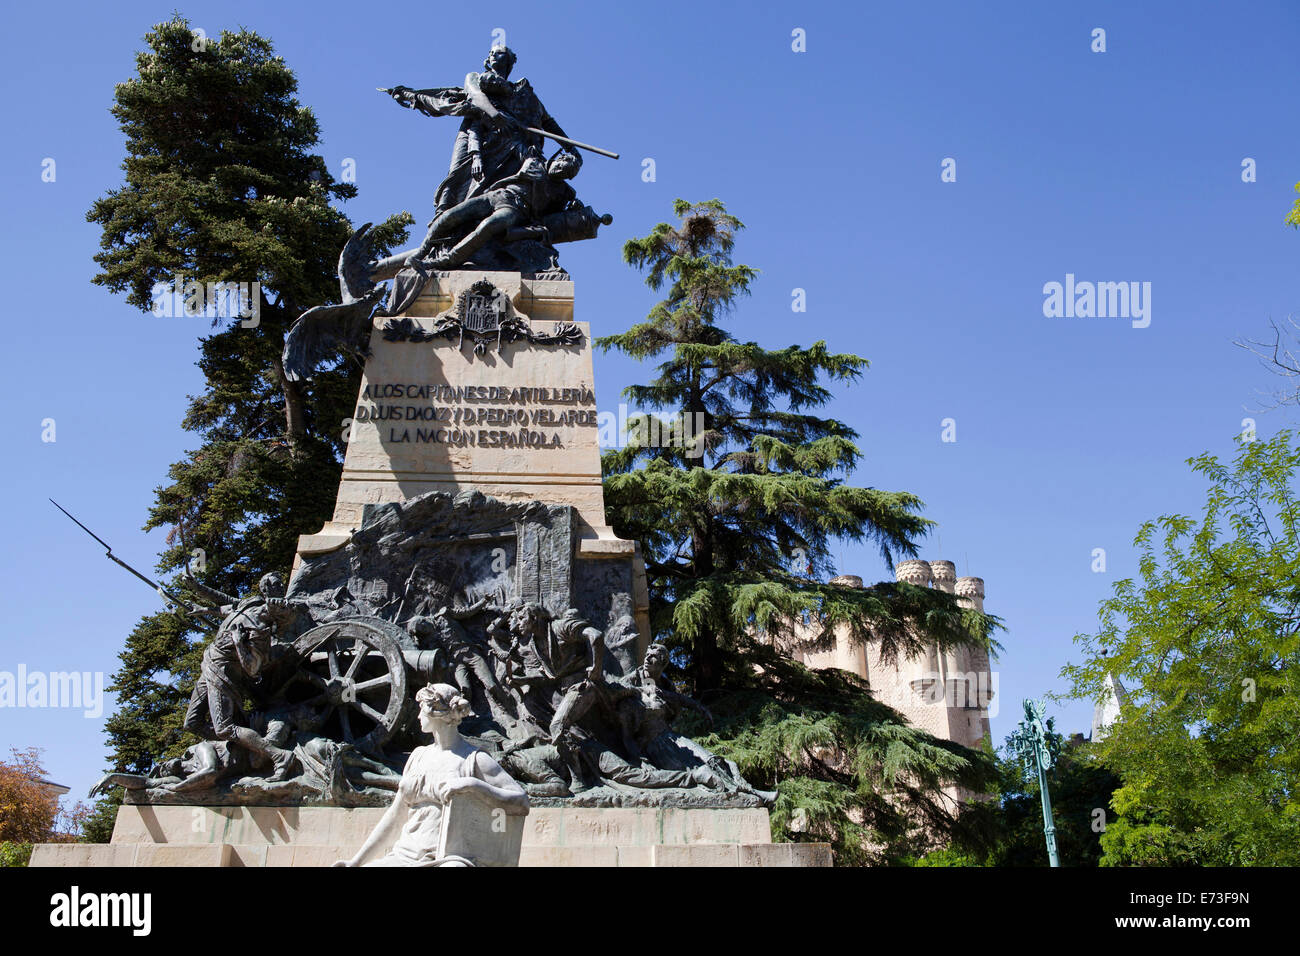 Spain, Castille-Leon, Segovia, Statue of Juan Bravo  Luis Daoiz and Pedro Velarde in Plaza la Reina Victoria Eugenia. Stock Photo